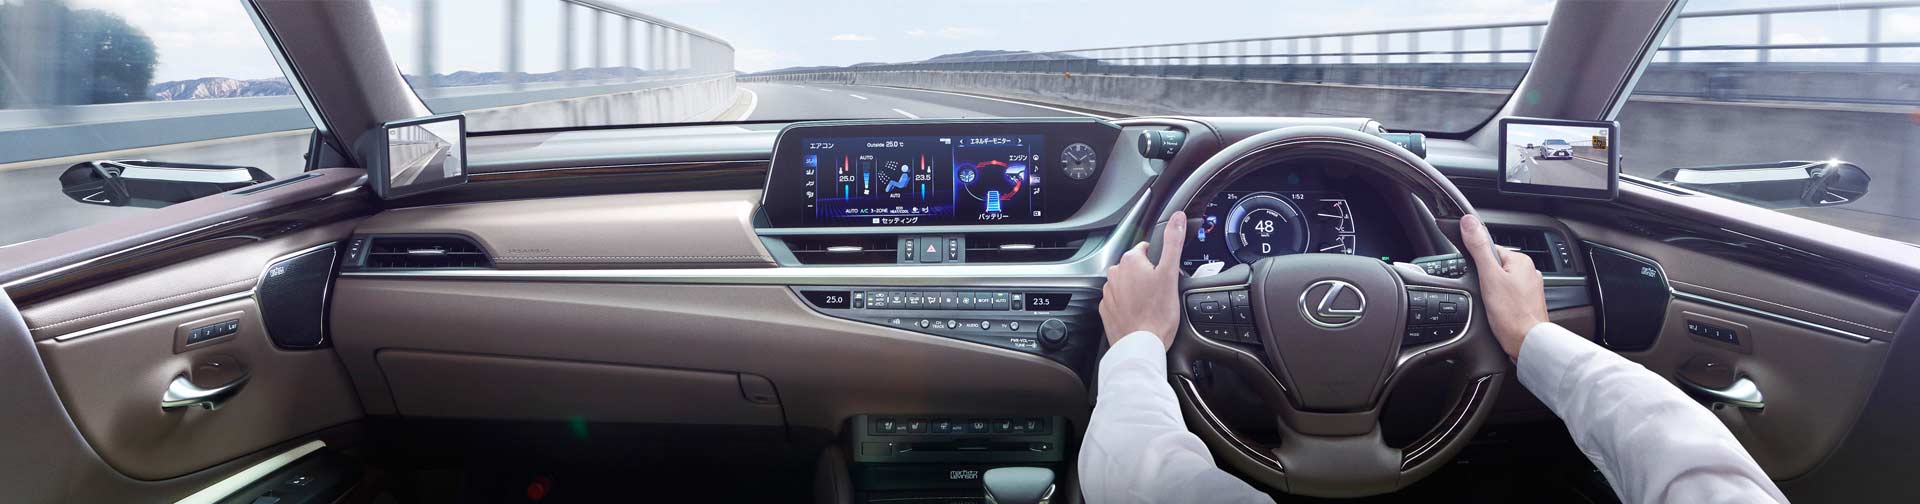 Lexus Digital Side-View Monitor 2019 ES 300h Interior